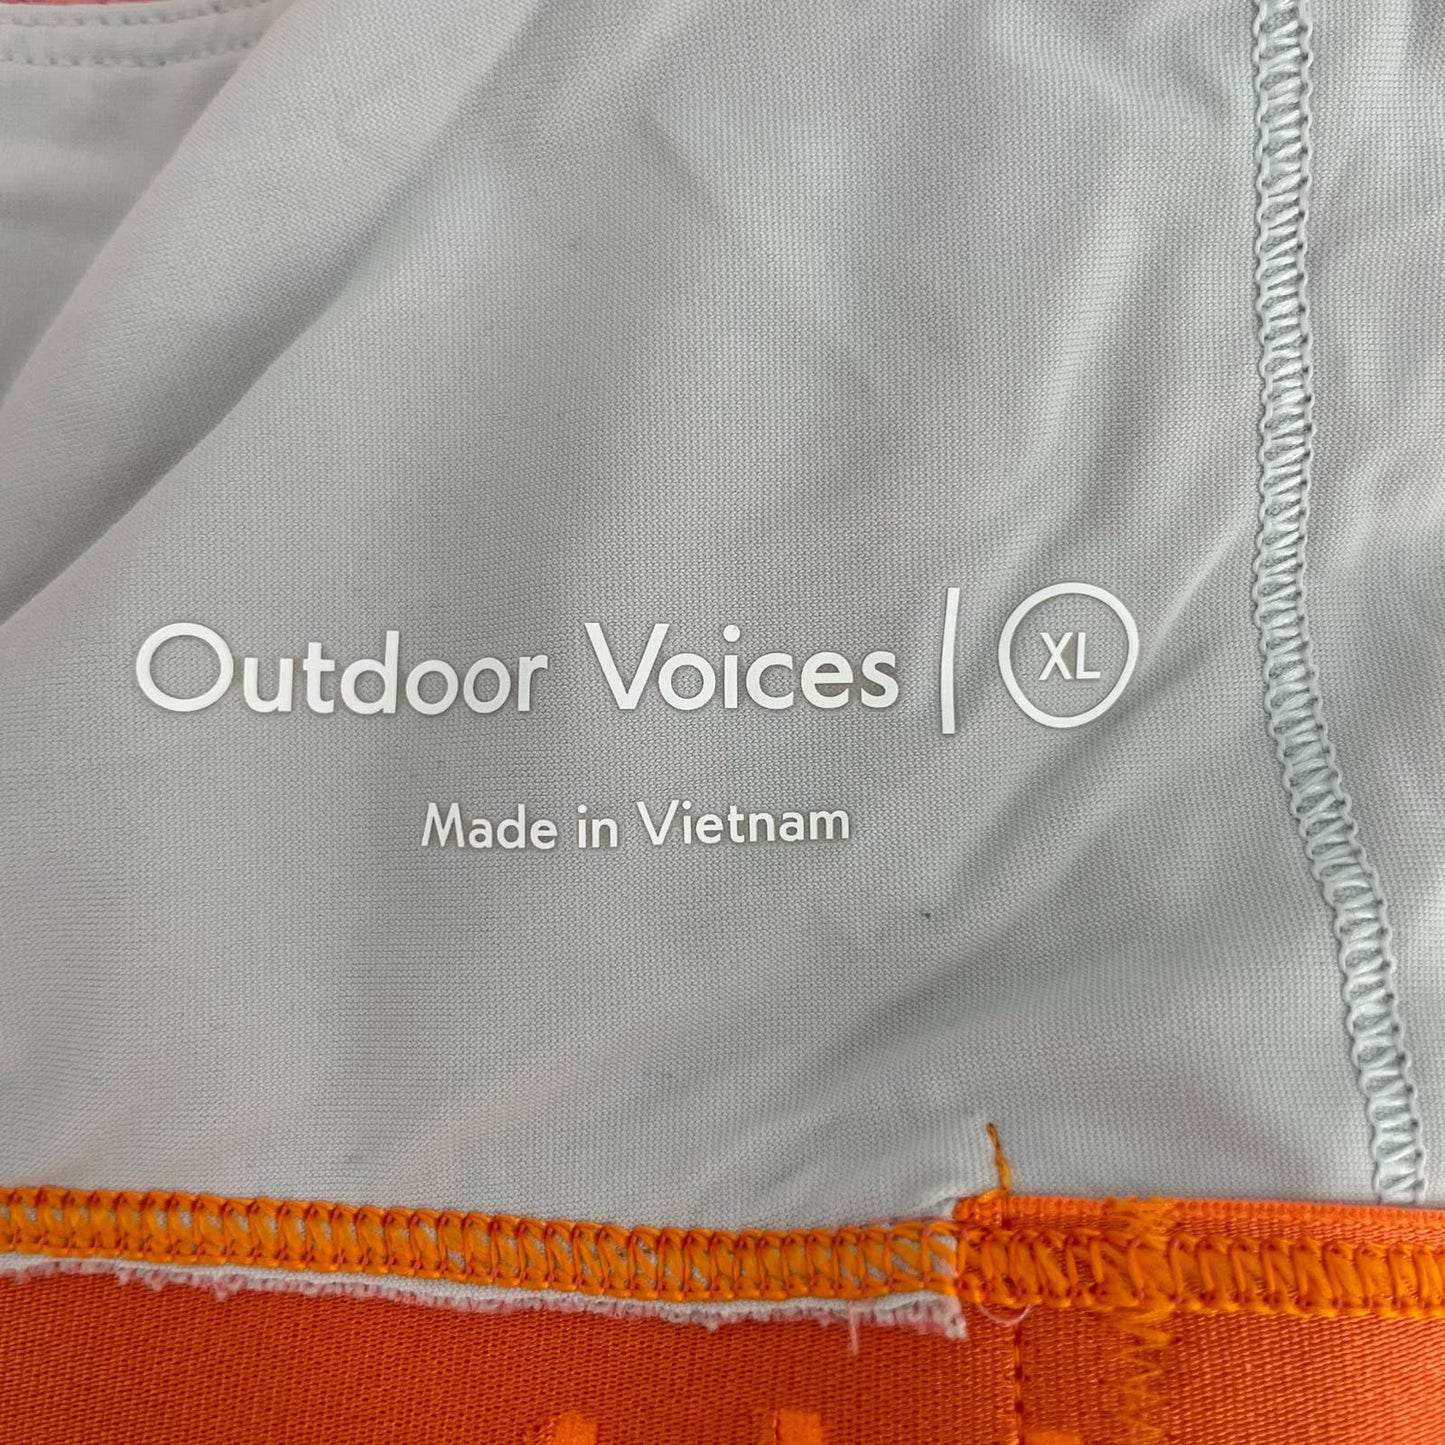 Outdoor Voices Grapefruit Helios Doing Things Sports Bra Wavy Print Retro Top Size XL